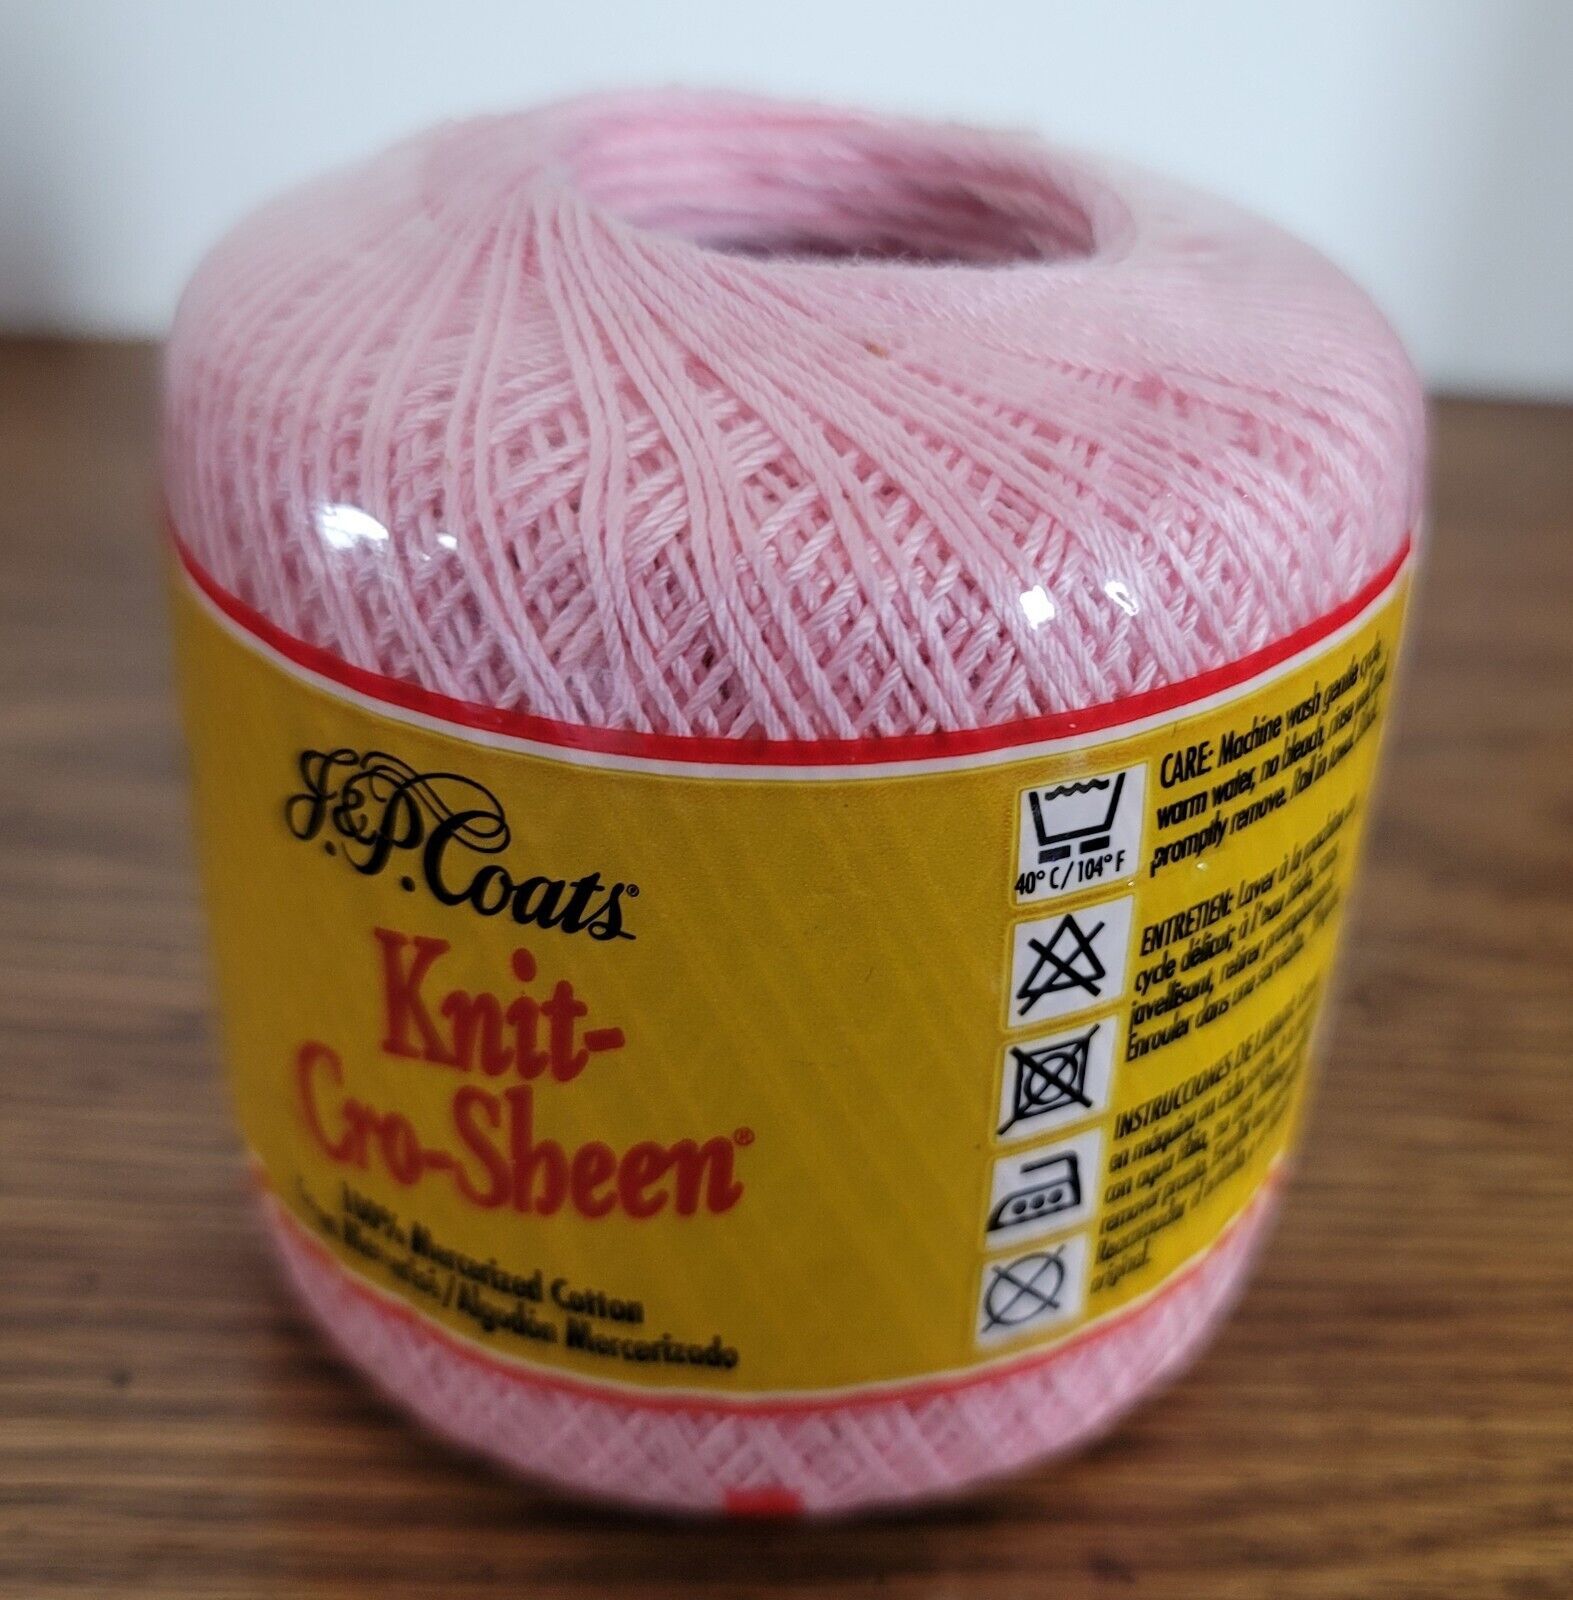 1 J & P Coats Knit-Cro-Sheen Mercerized Cotton 150 Yards Orchid Pink Size 10 - $3.95